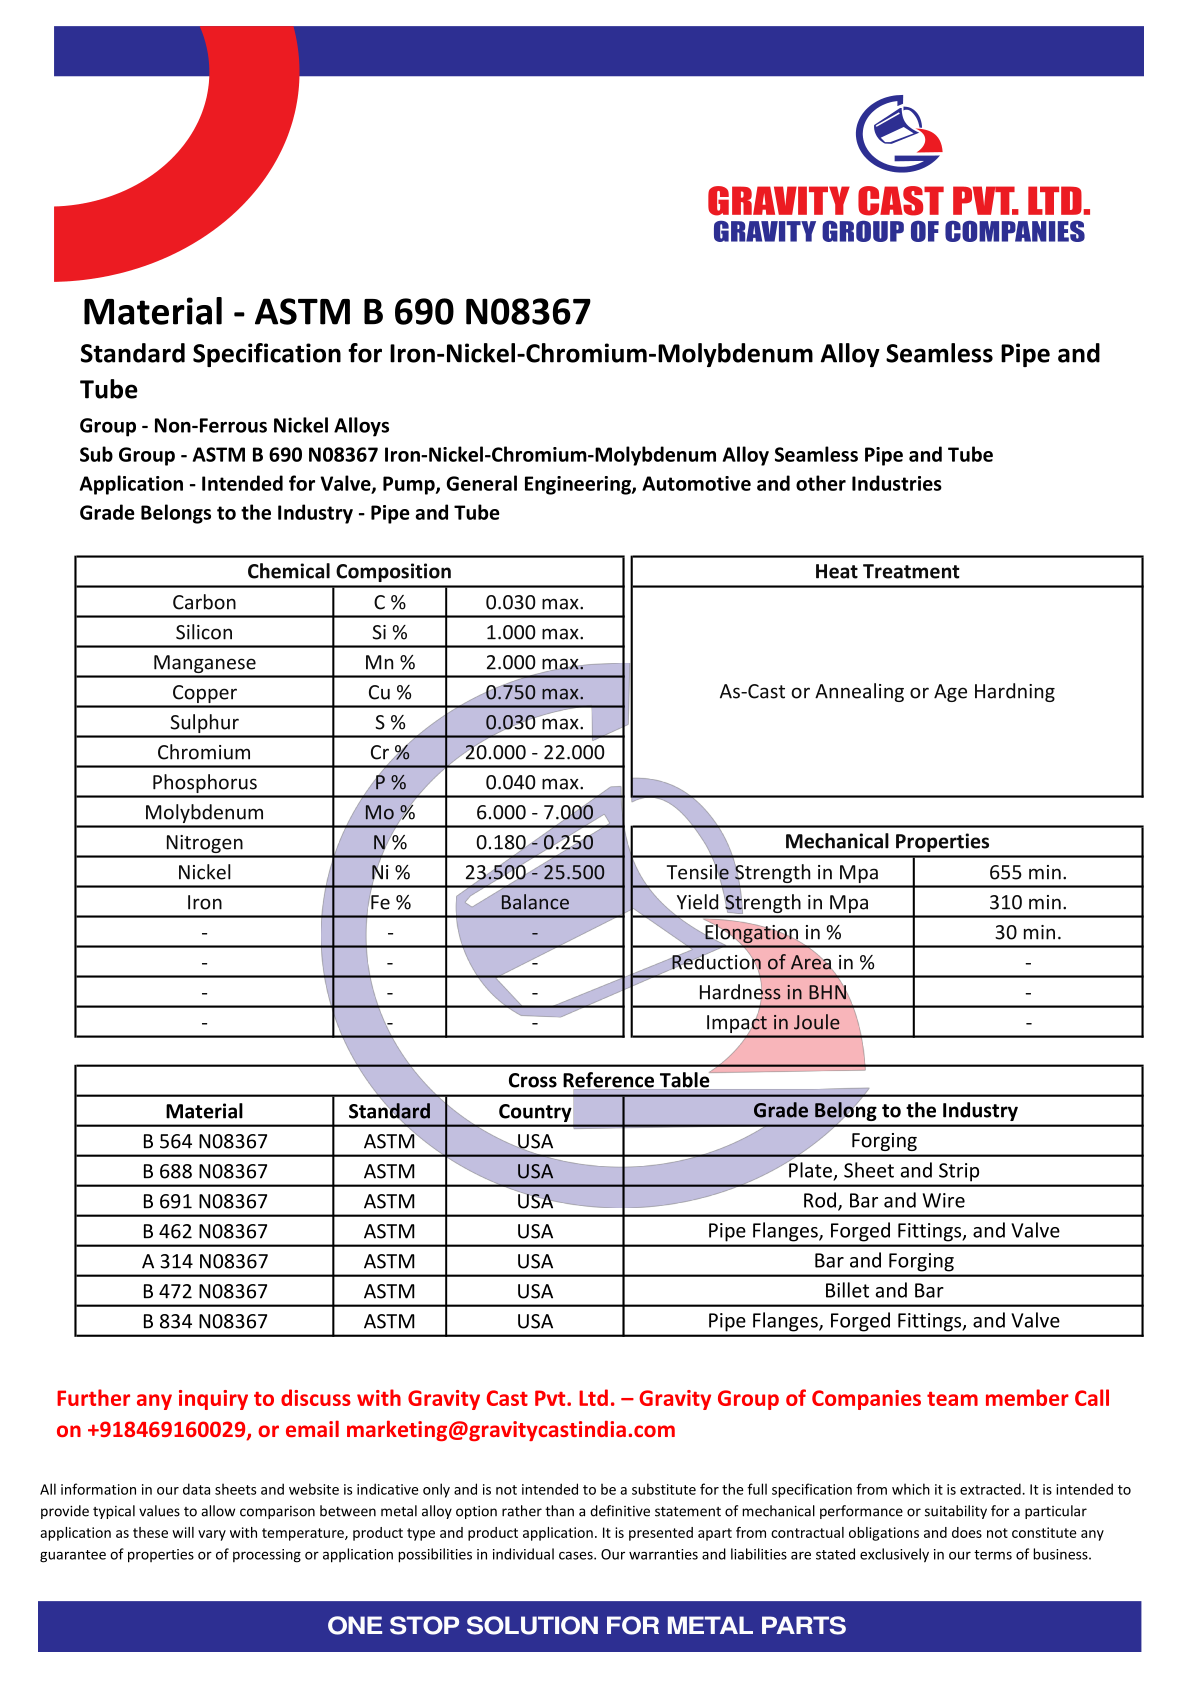 ASTM B 690 N08367.pdf